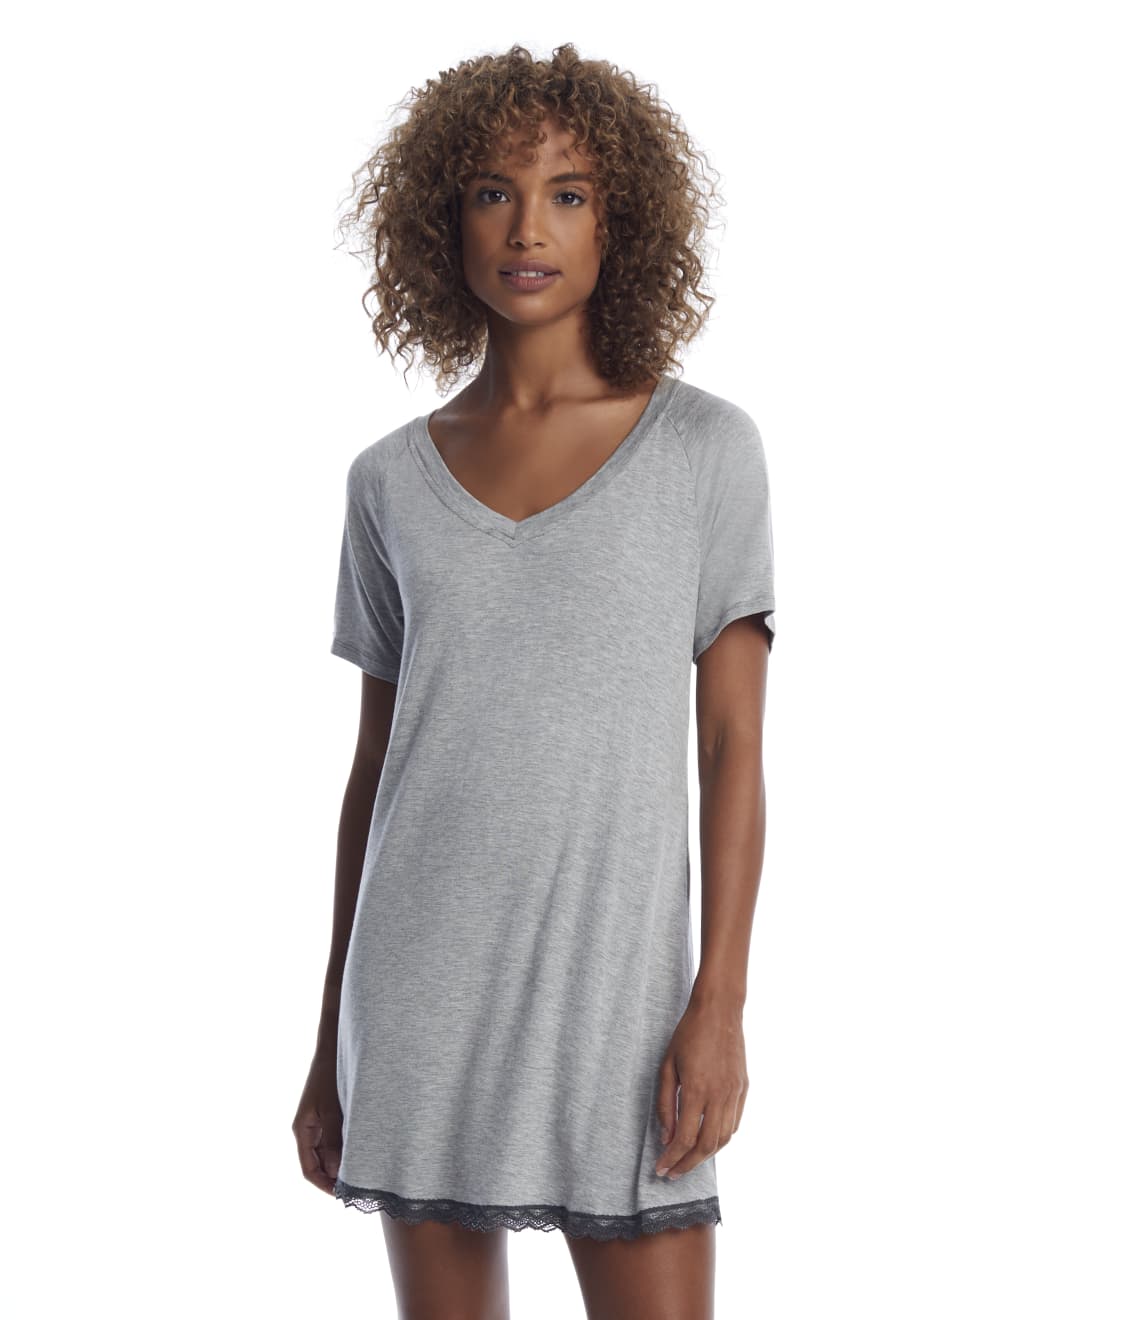 Honeydew Intimates: Heather Grey All American Knit Sleep Shirt 33135-GRY